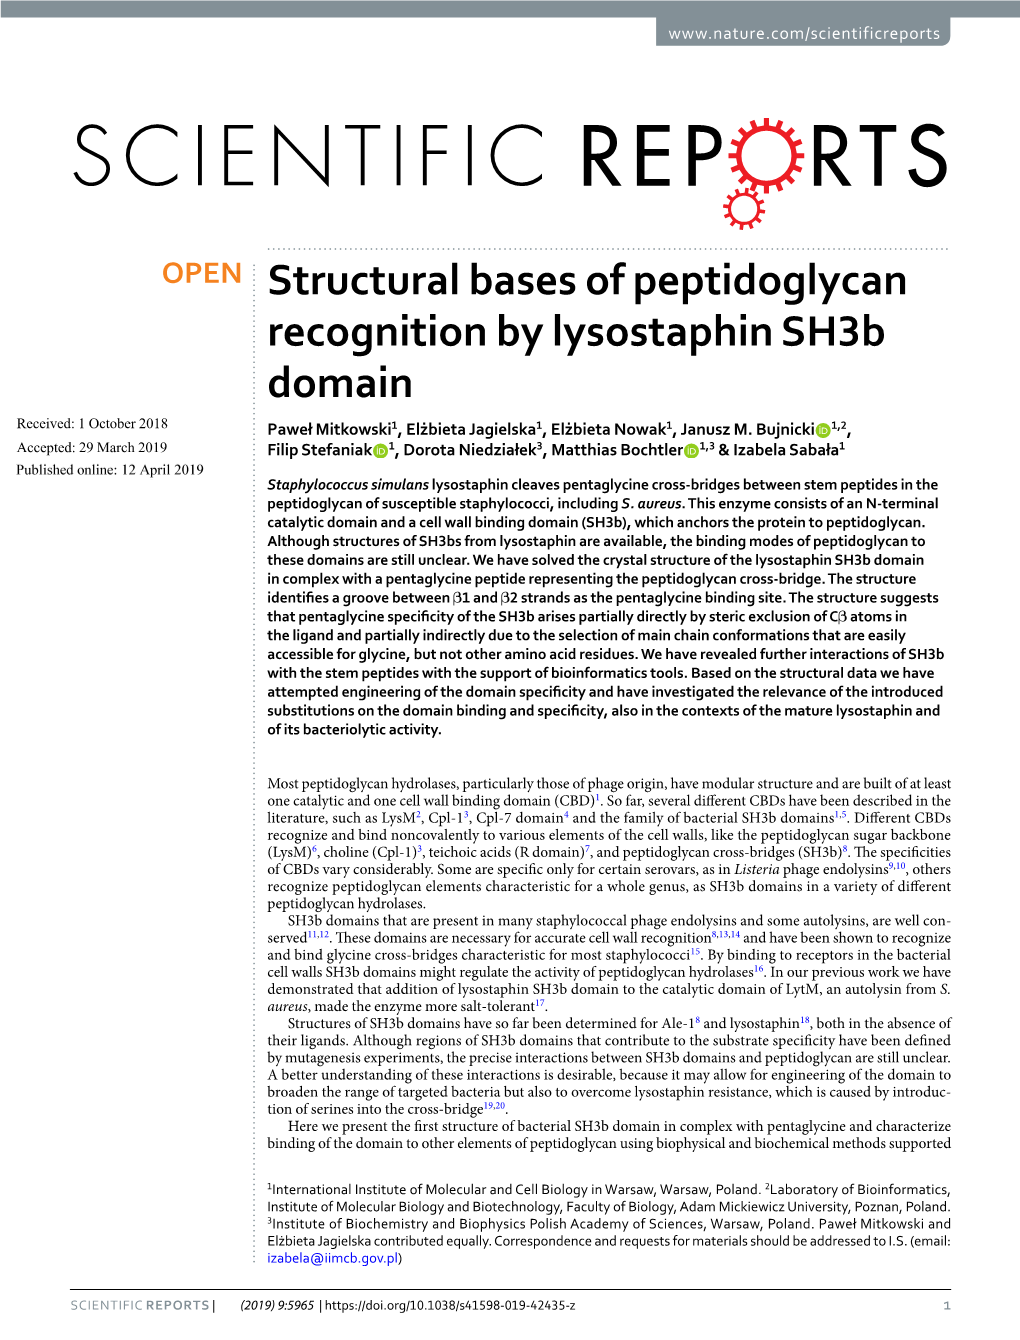 Structural Bases of Peptidoglycan Recognition by Lysostaphin Sh3b Domain Received: 1 October 2018 Paweł Mitkowski1, Elżbieta Jagielska1, Elżbieta Nowak1, Janusz M